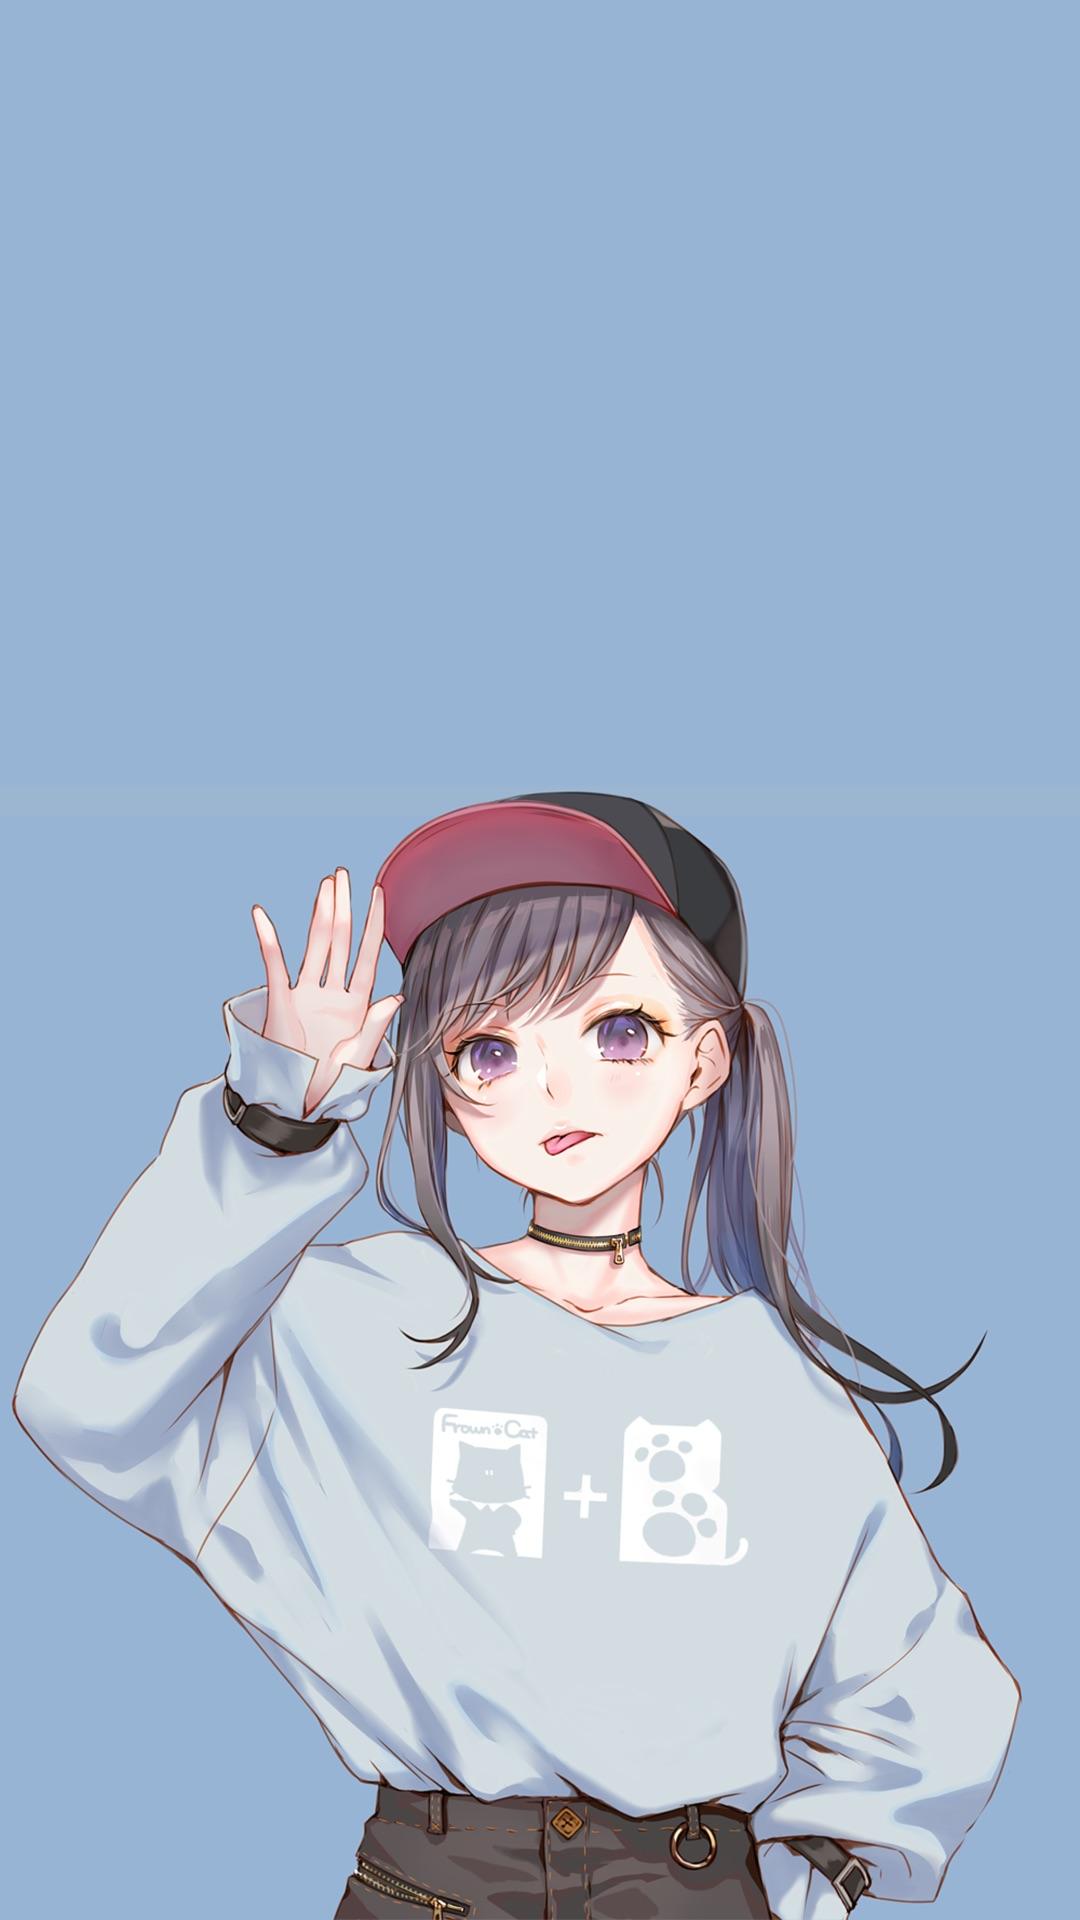 Anime Profile Picture Girl - 1080x1920 Wallpaper 